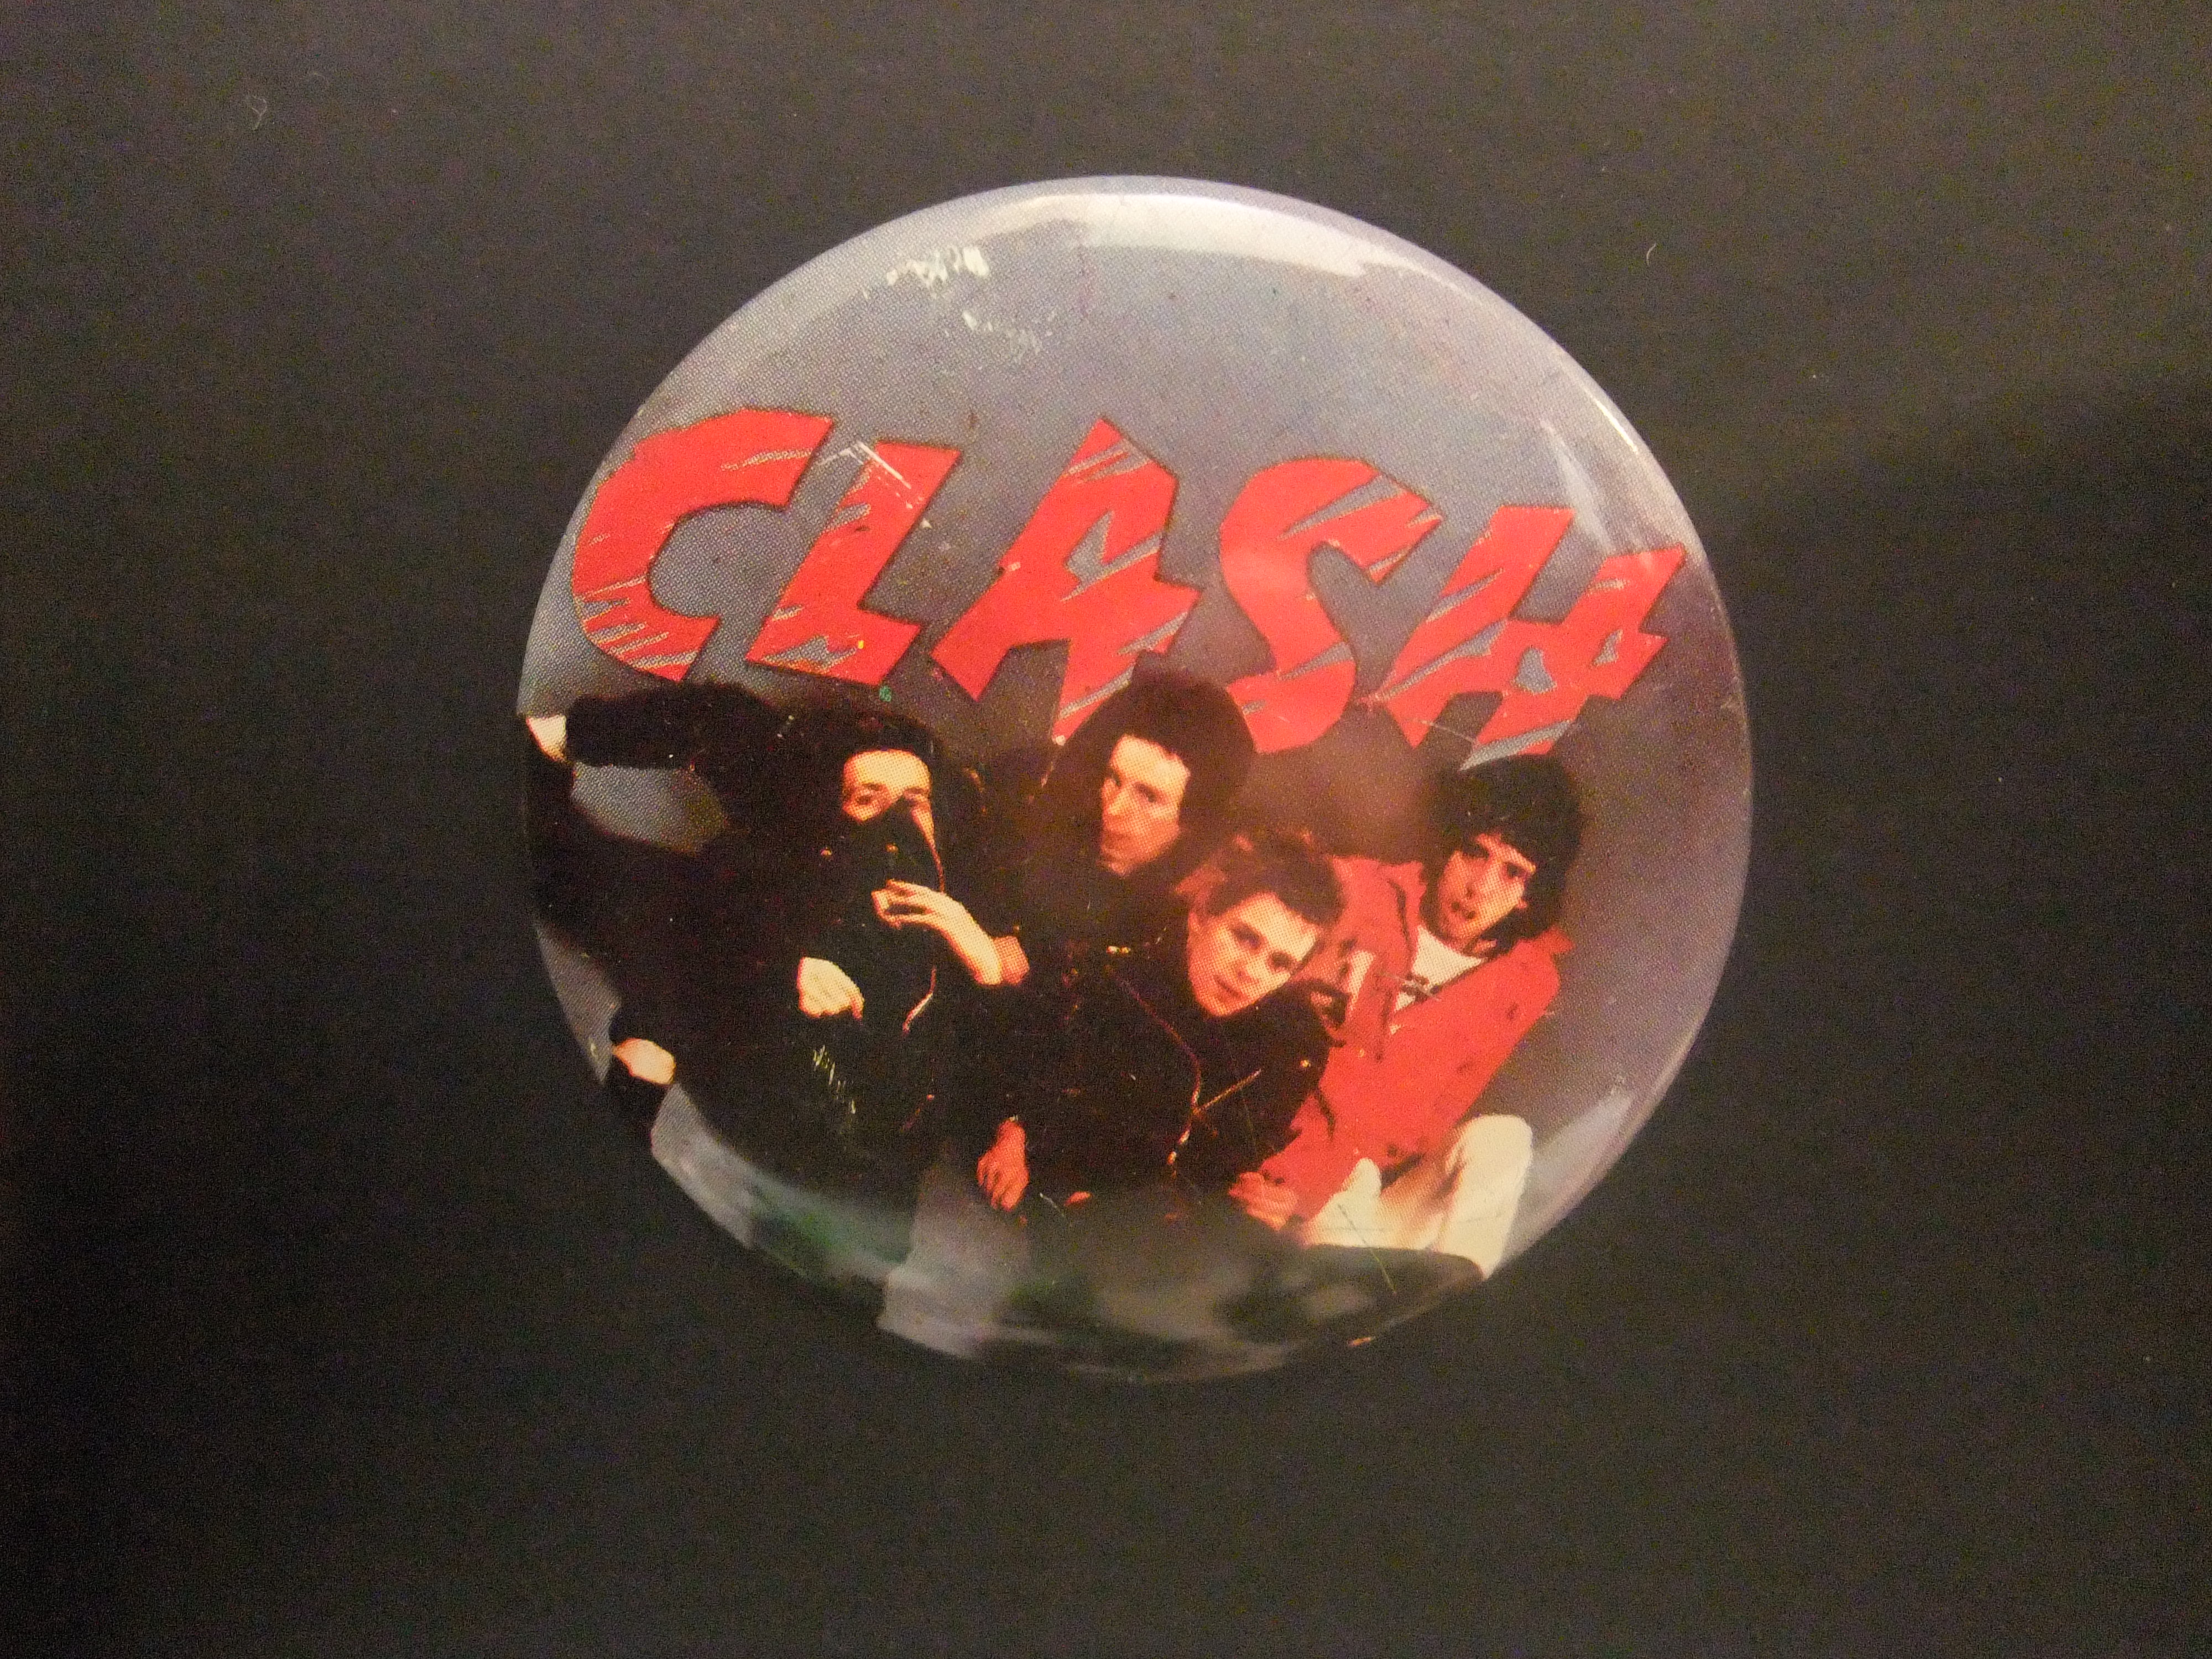 The Clash Britse punkgroep